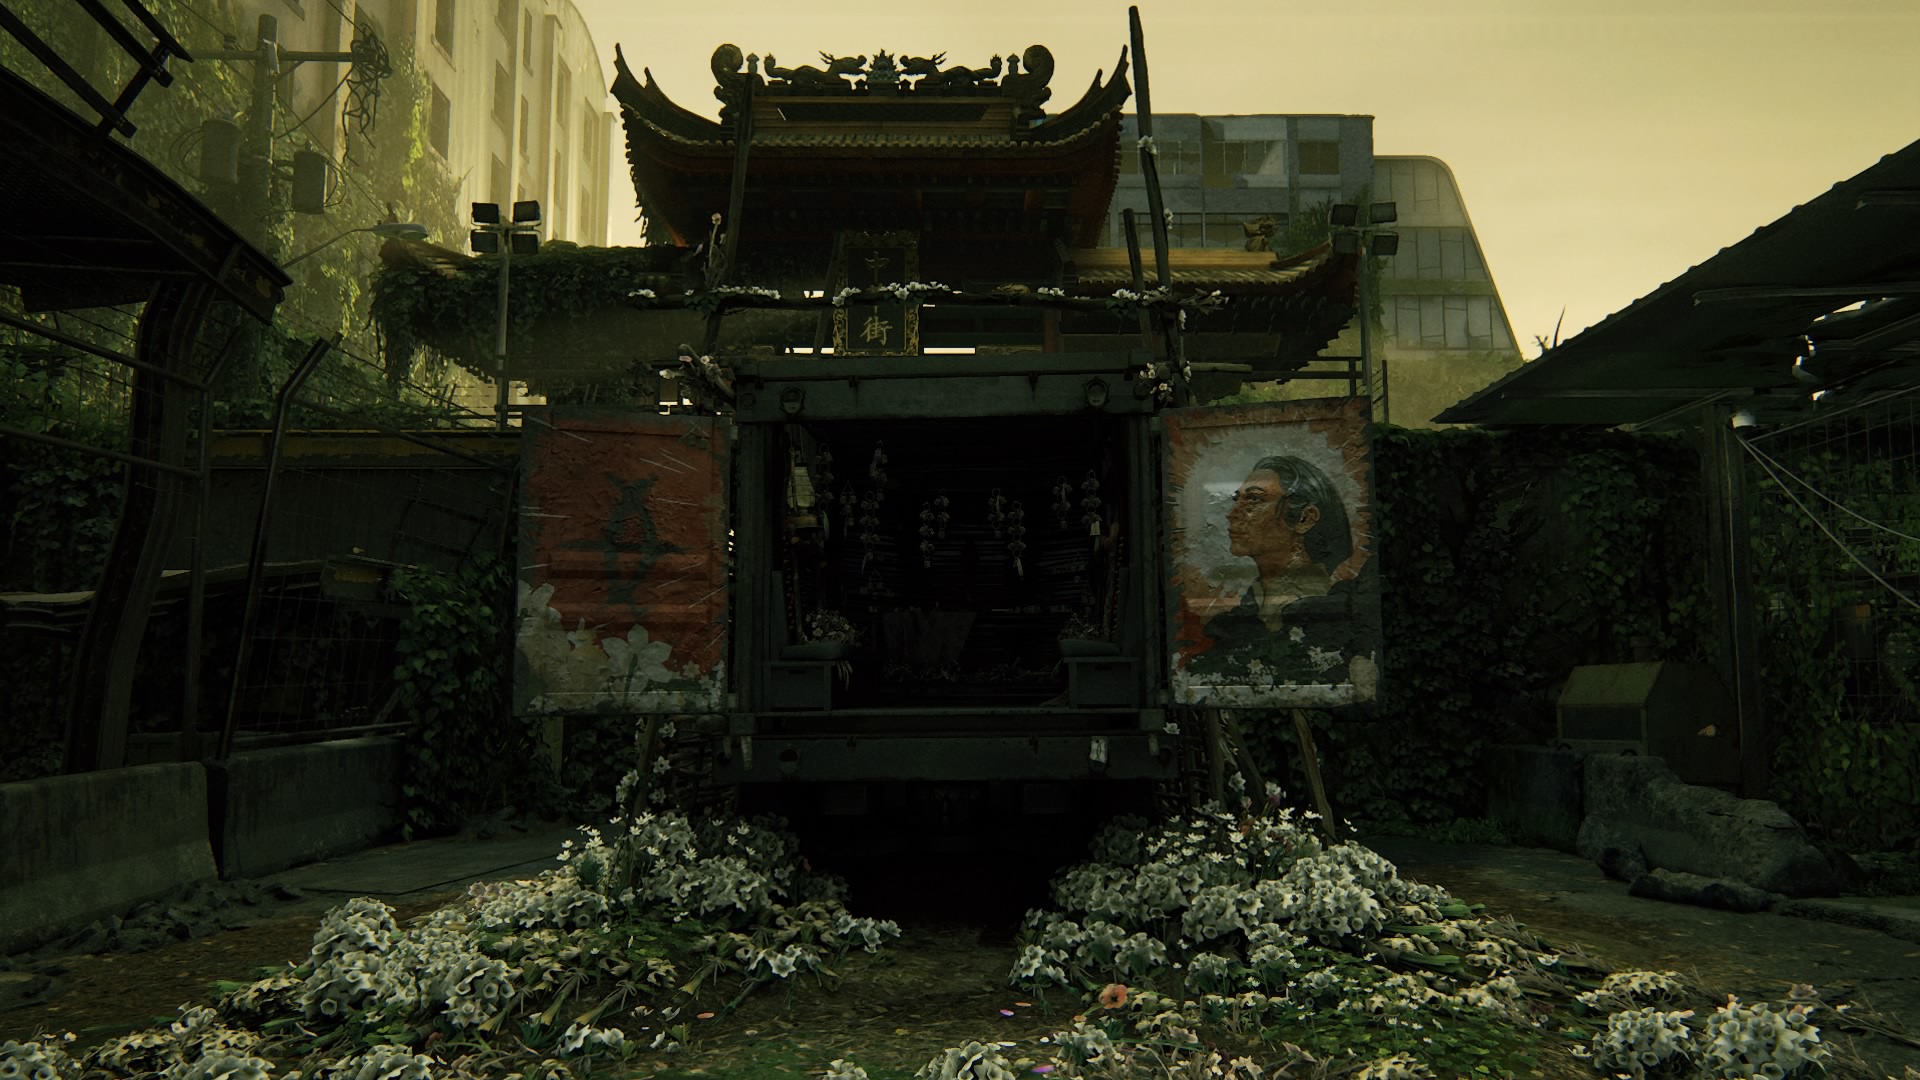 The Last of Us Part II - Seraphites Memorial by subinitsu